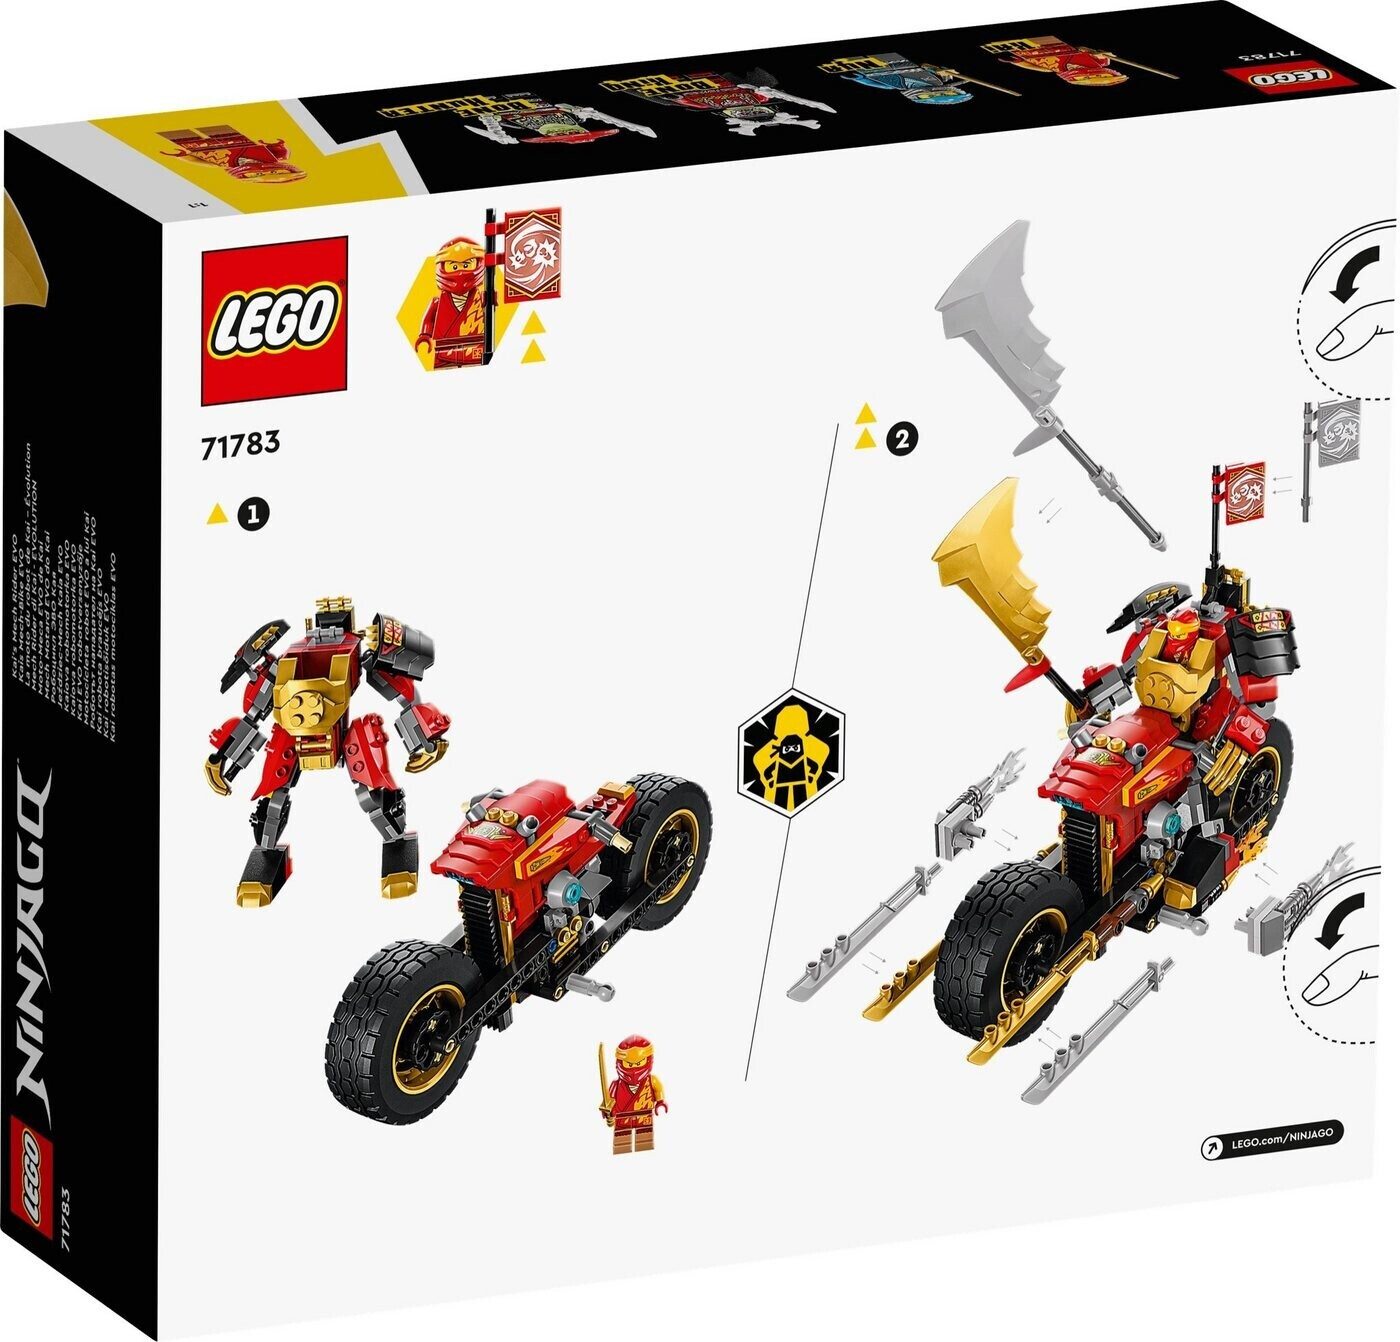 LEGO NINJAGO 71783 Kais Mech-Bike EVO, Ninja Motorrad Spielzeug von Lego